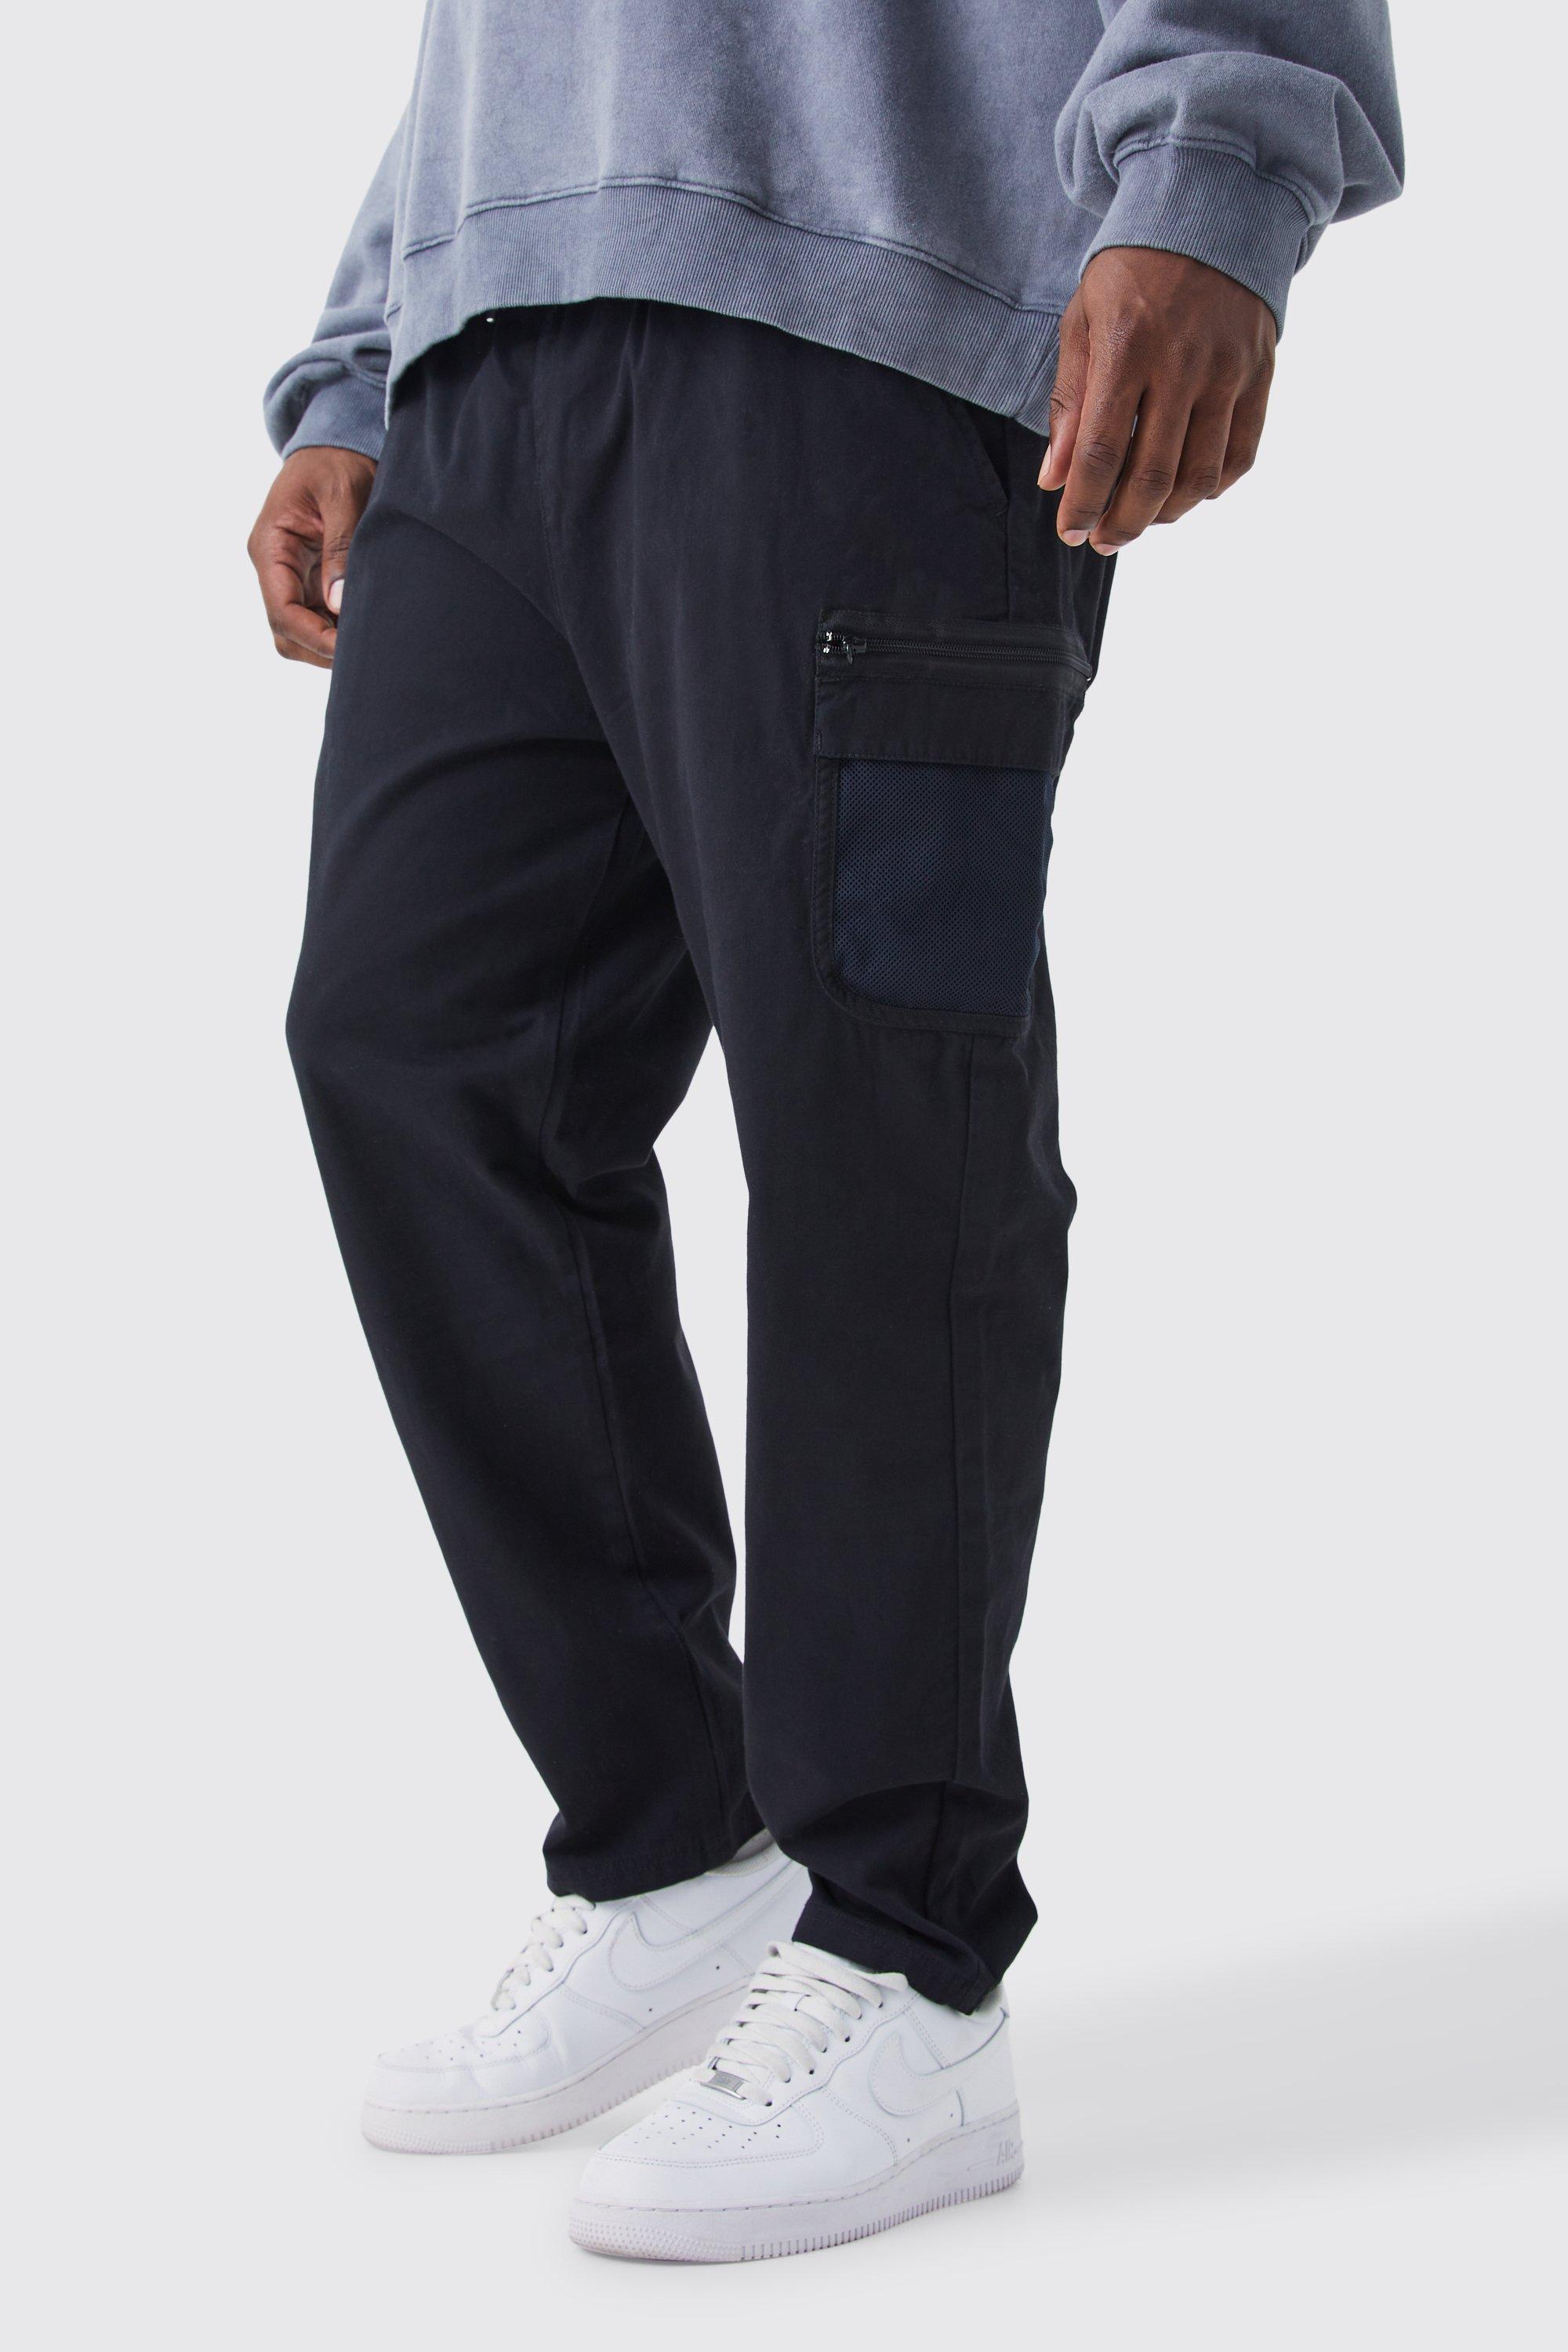 grande taille - pantalon cargo en mesh homme - noir - xxxl, noir